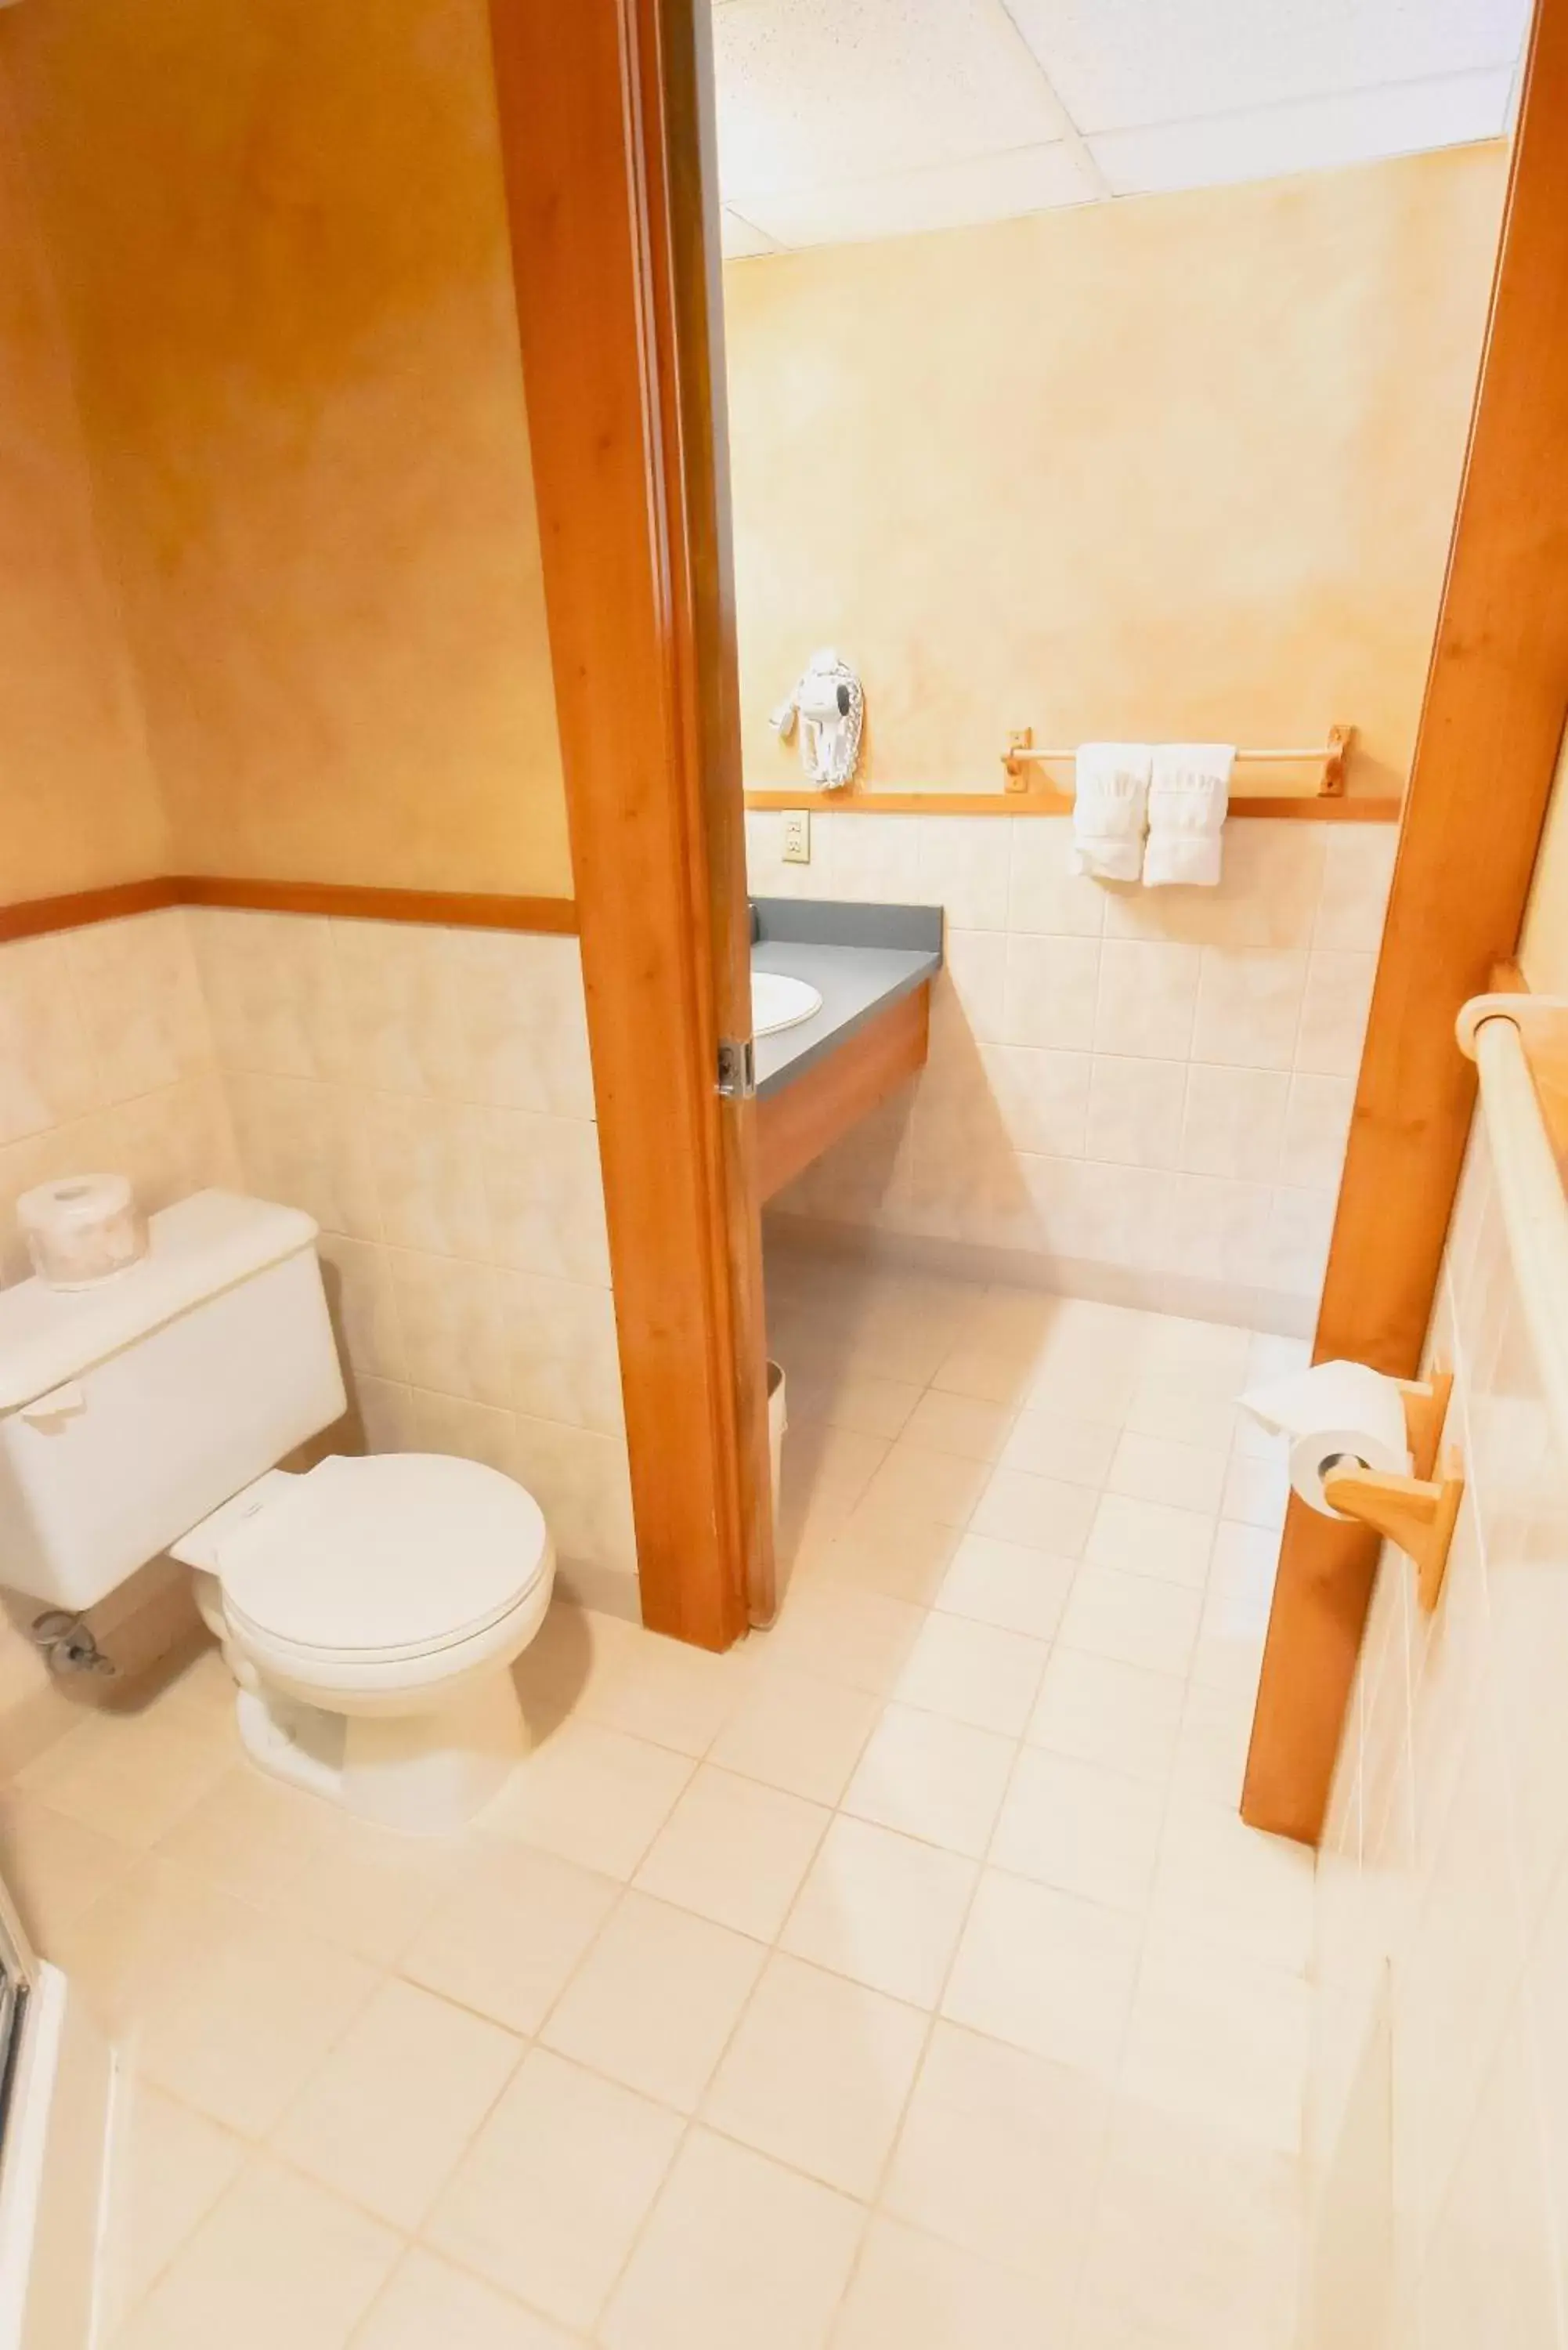 Bathroom in Canad Inns Destination Centre Fort Garry